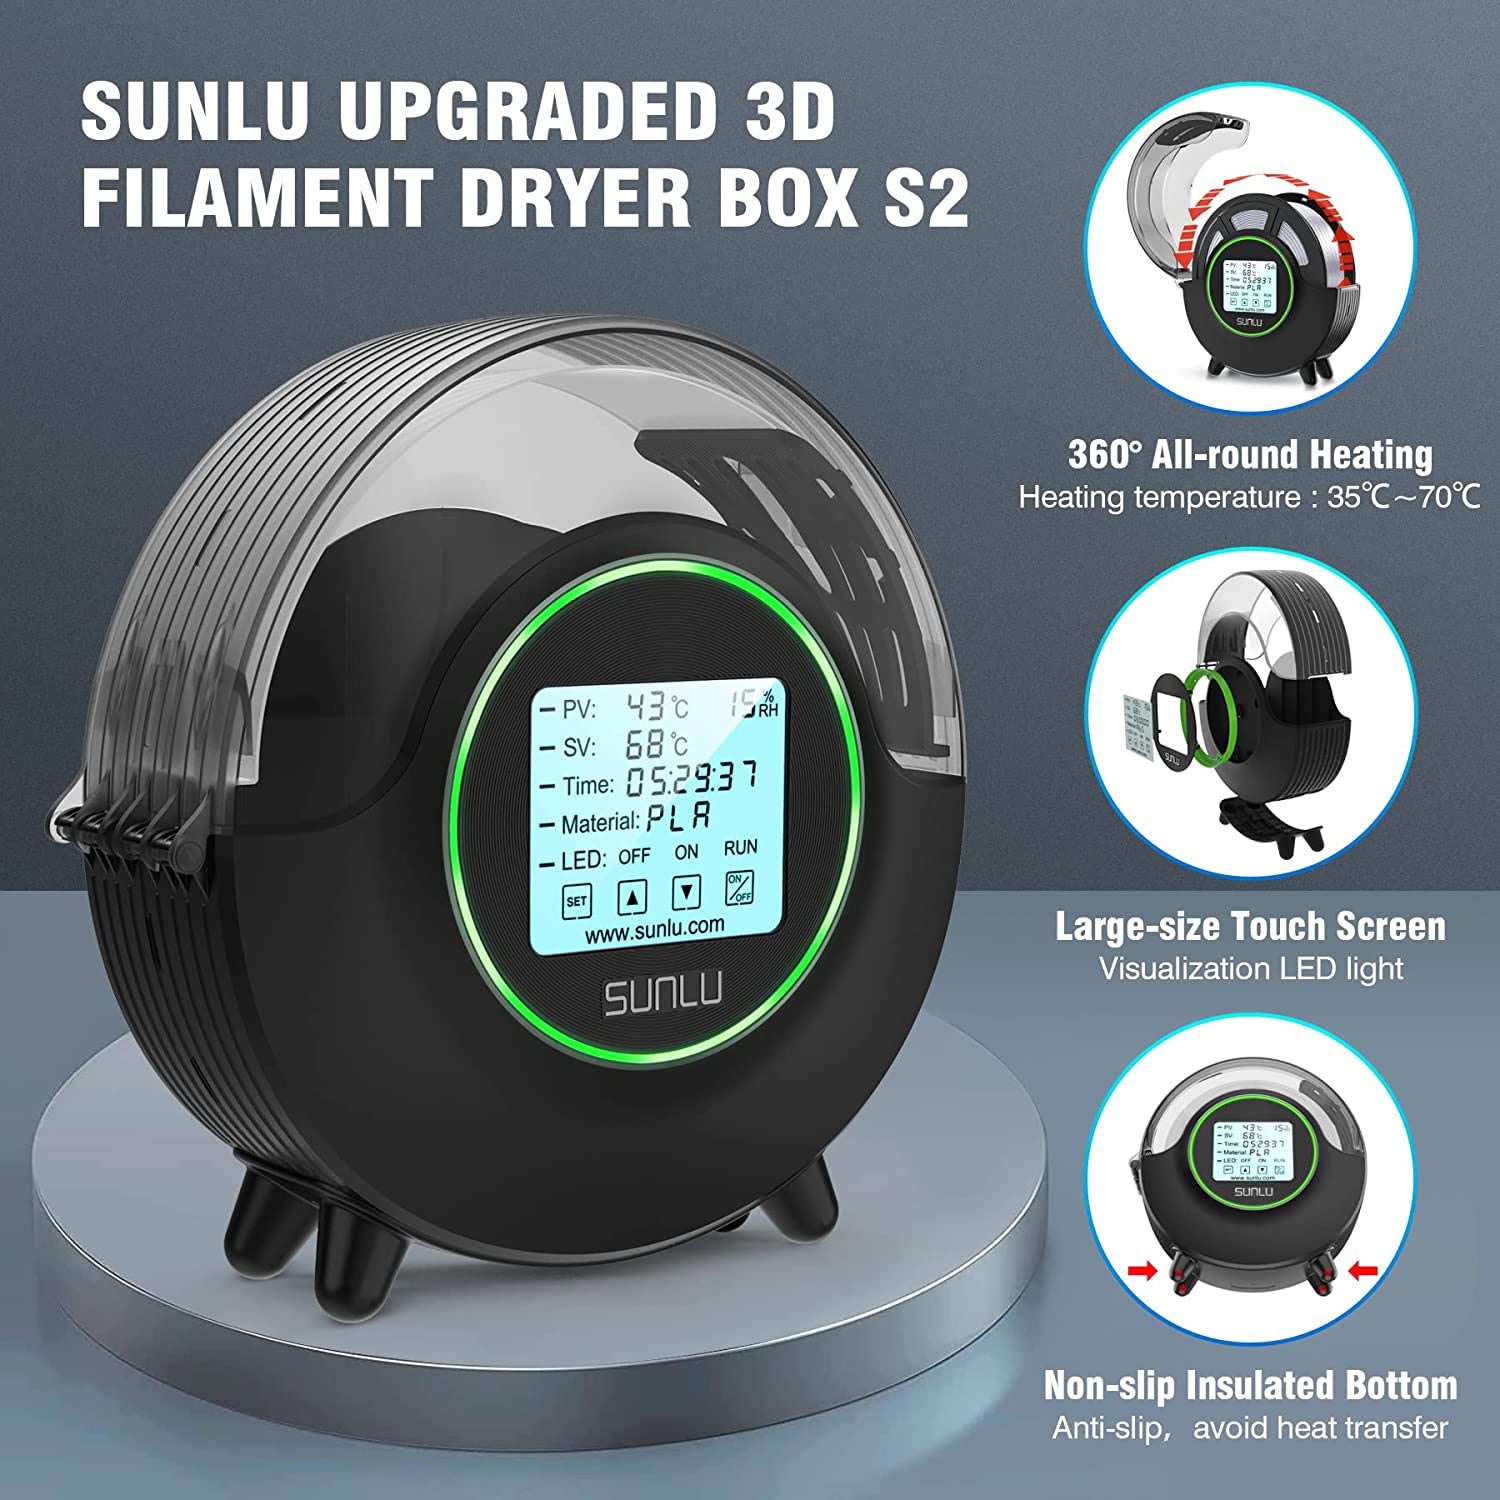 Sunlu FilaDryer S2 - Séchage filament impression 3D - A-Printer